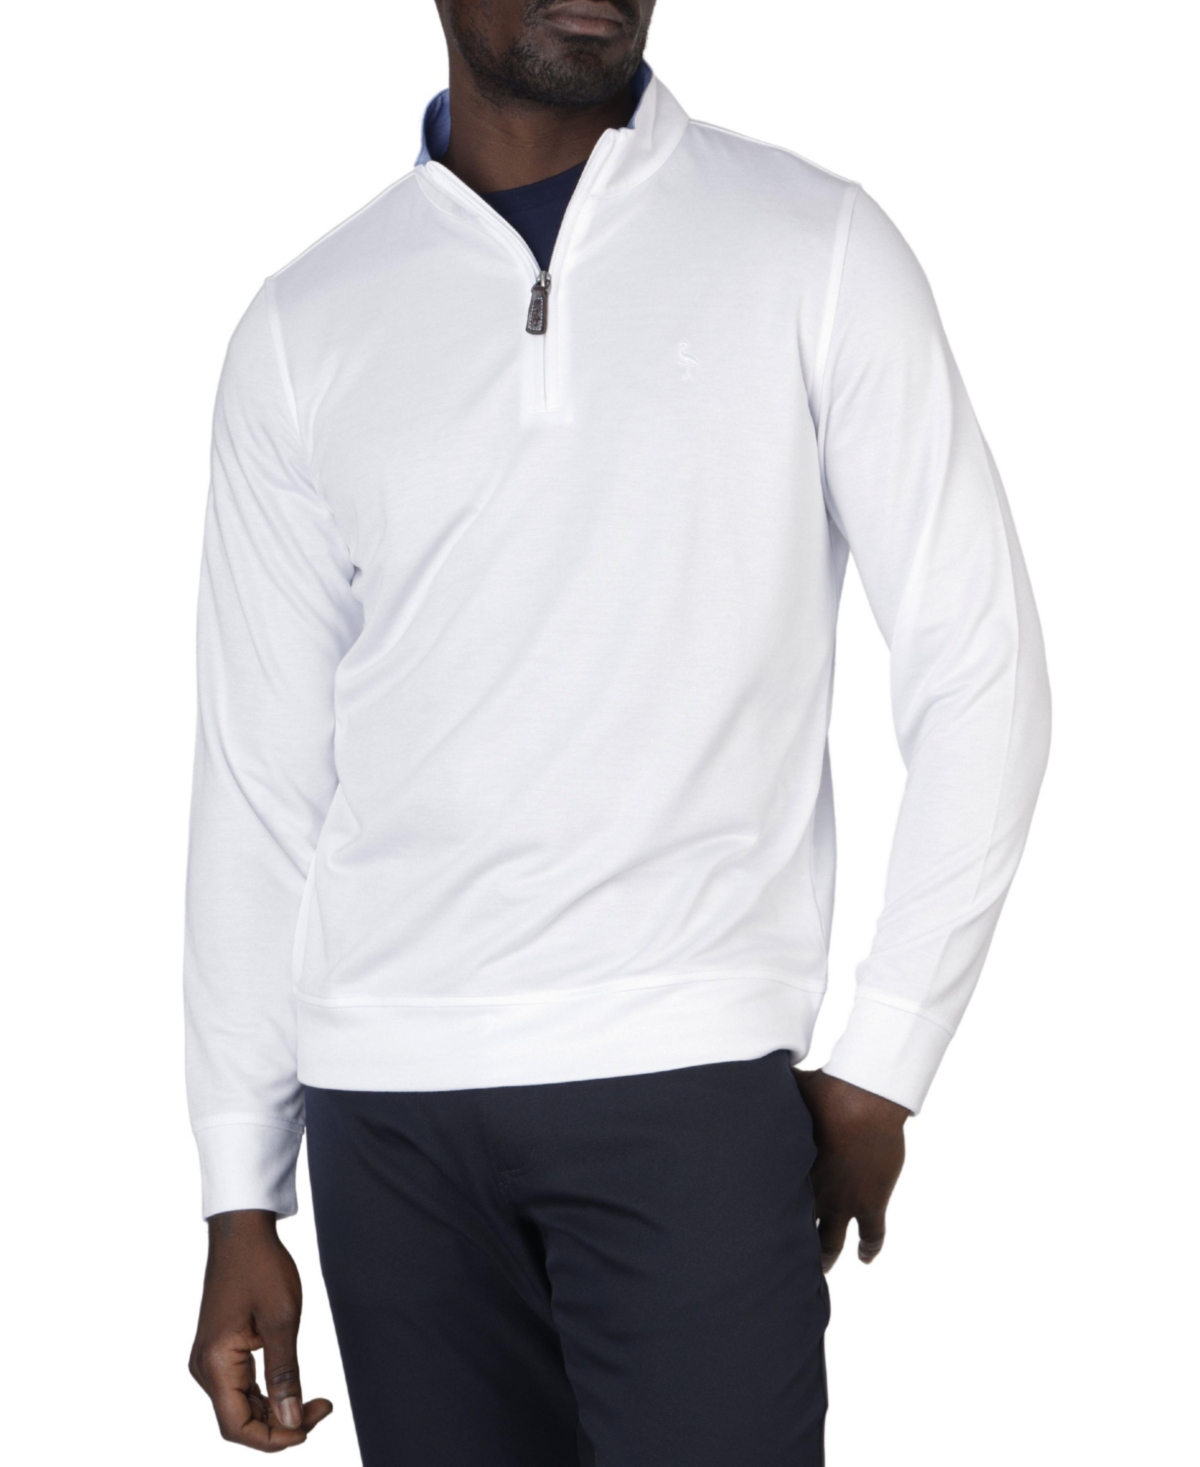 Solid Modal Q zip Pullover Sweatshirt - White